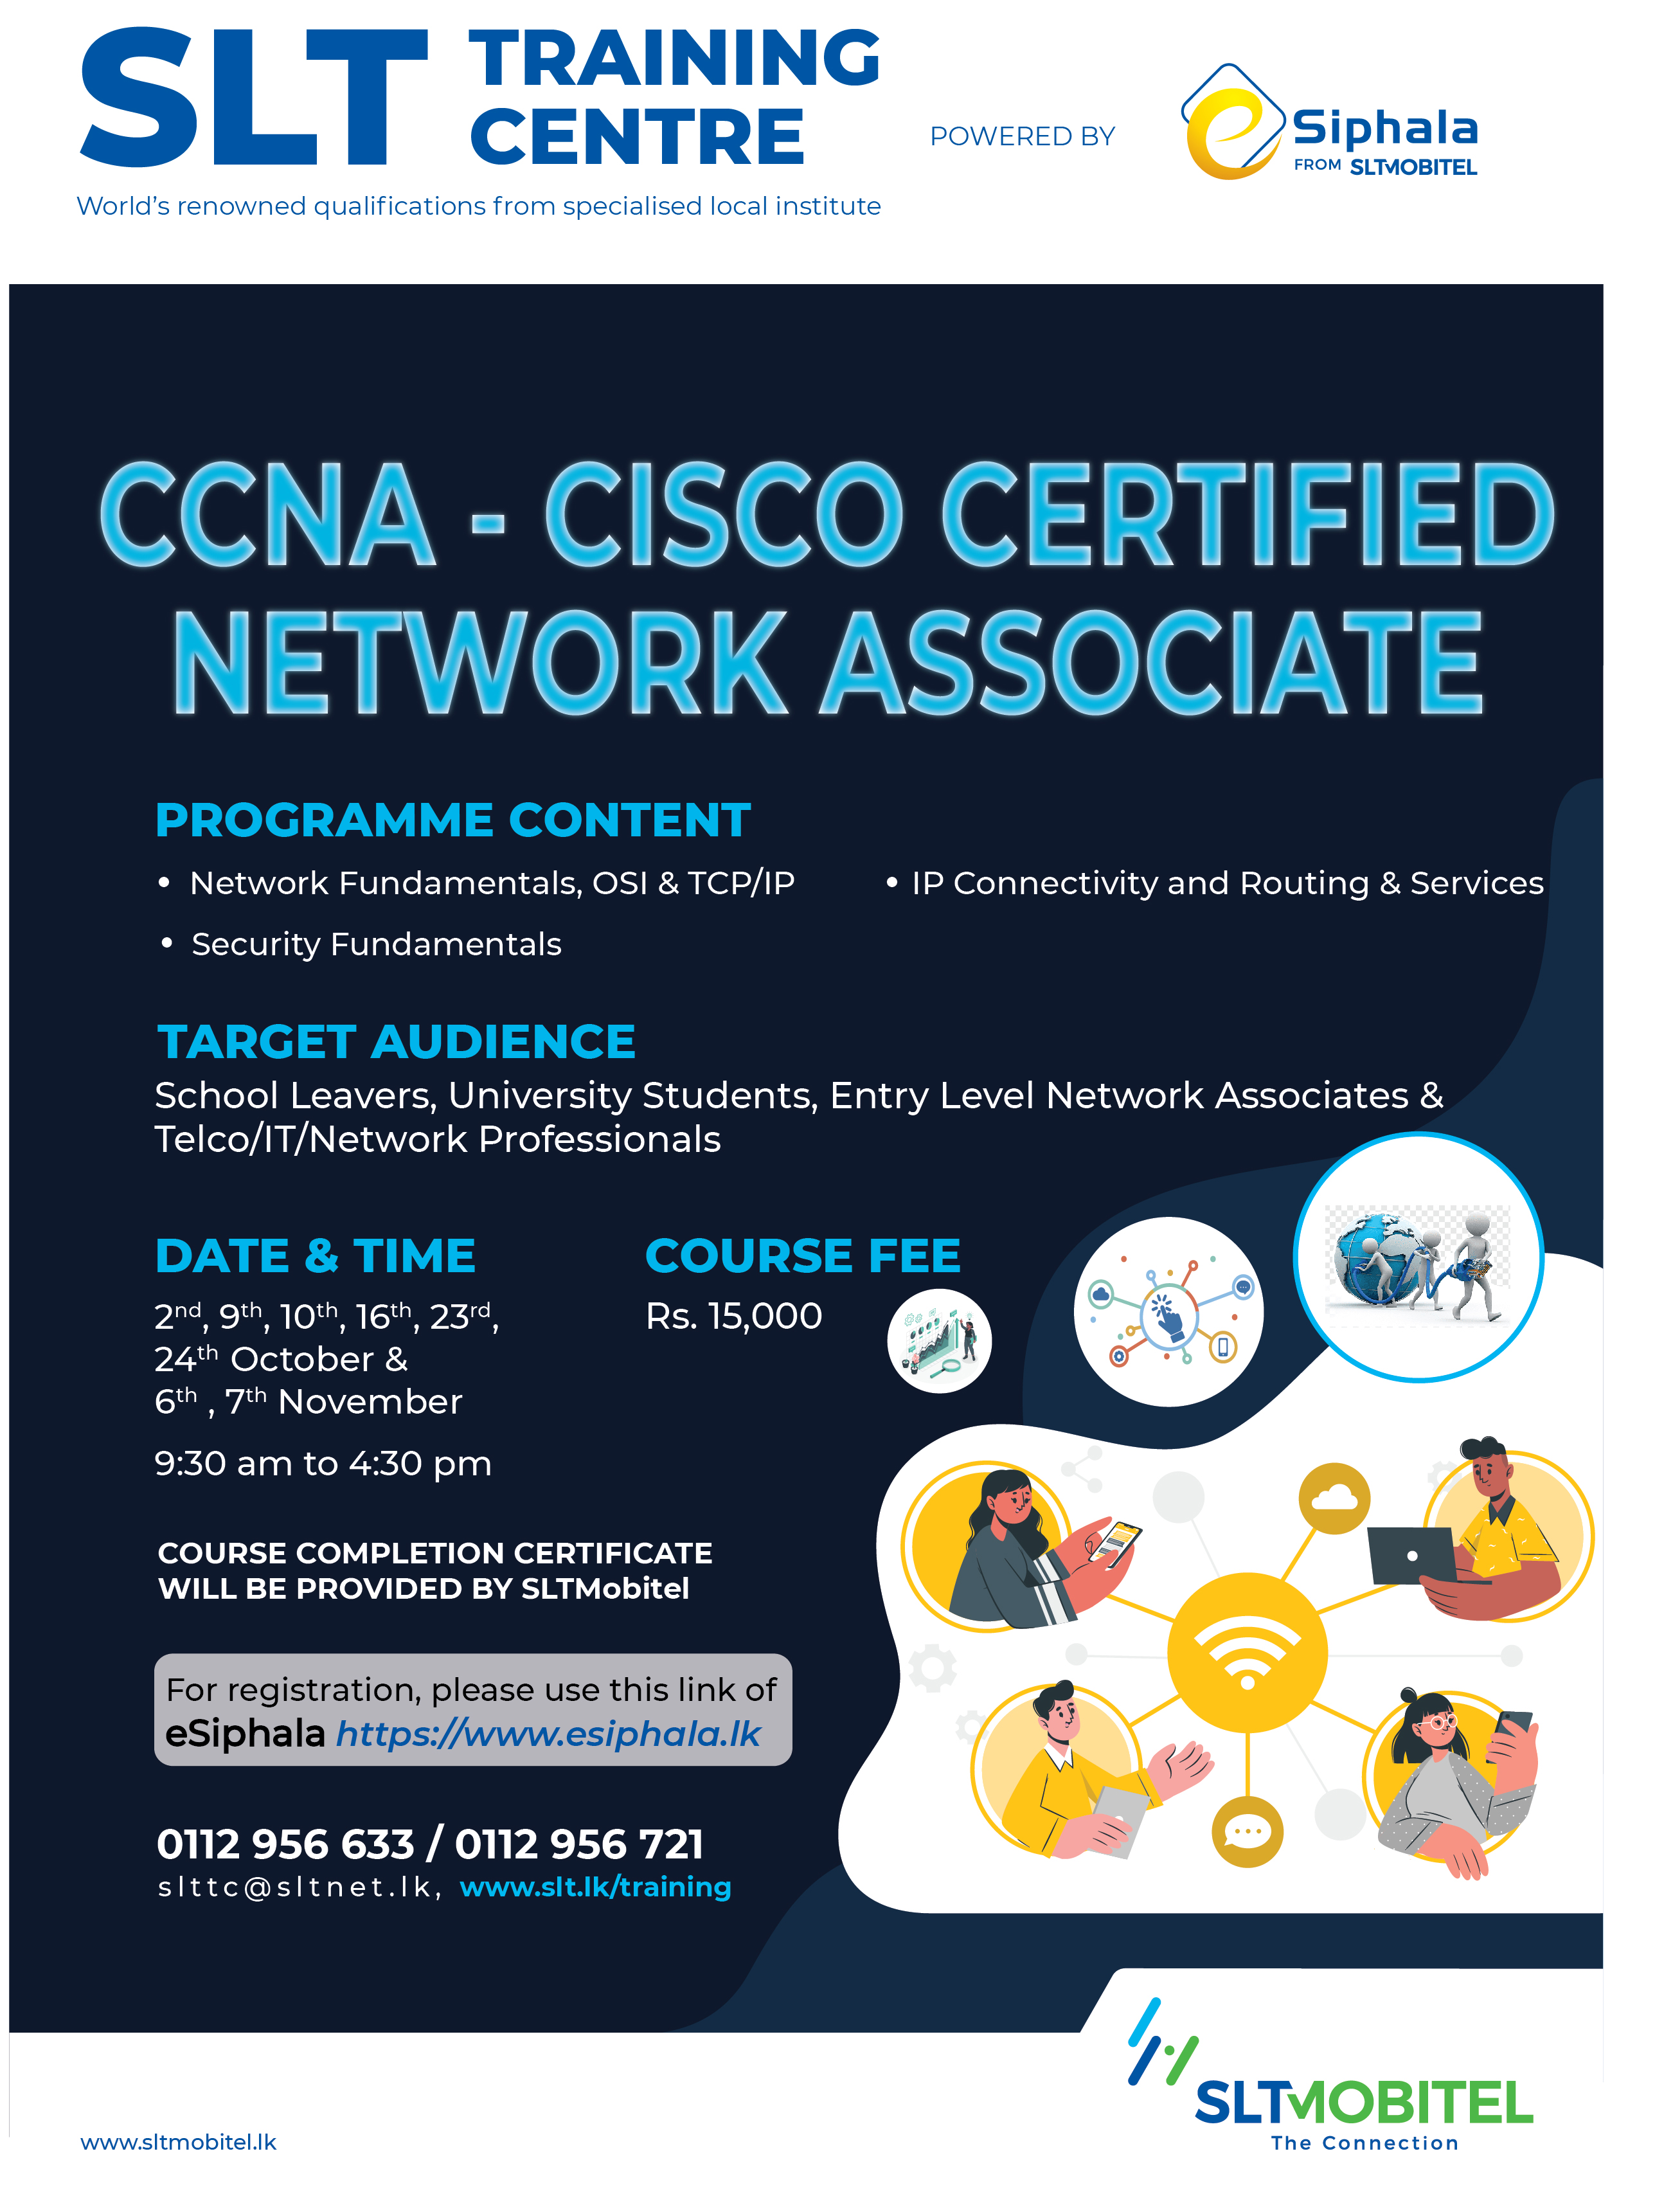 CCNA(Cisco Certified Network Associate)